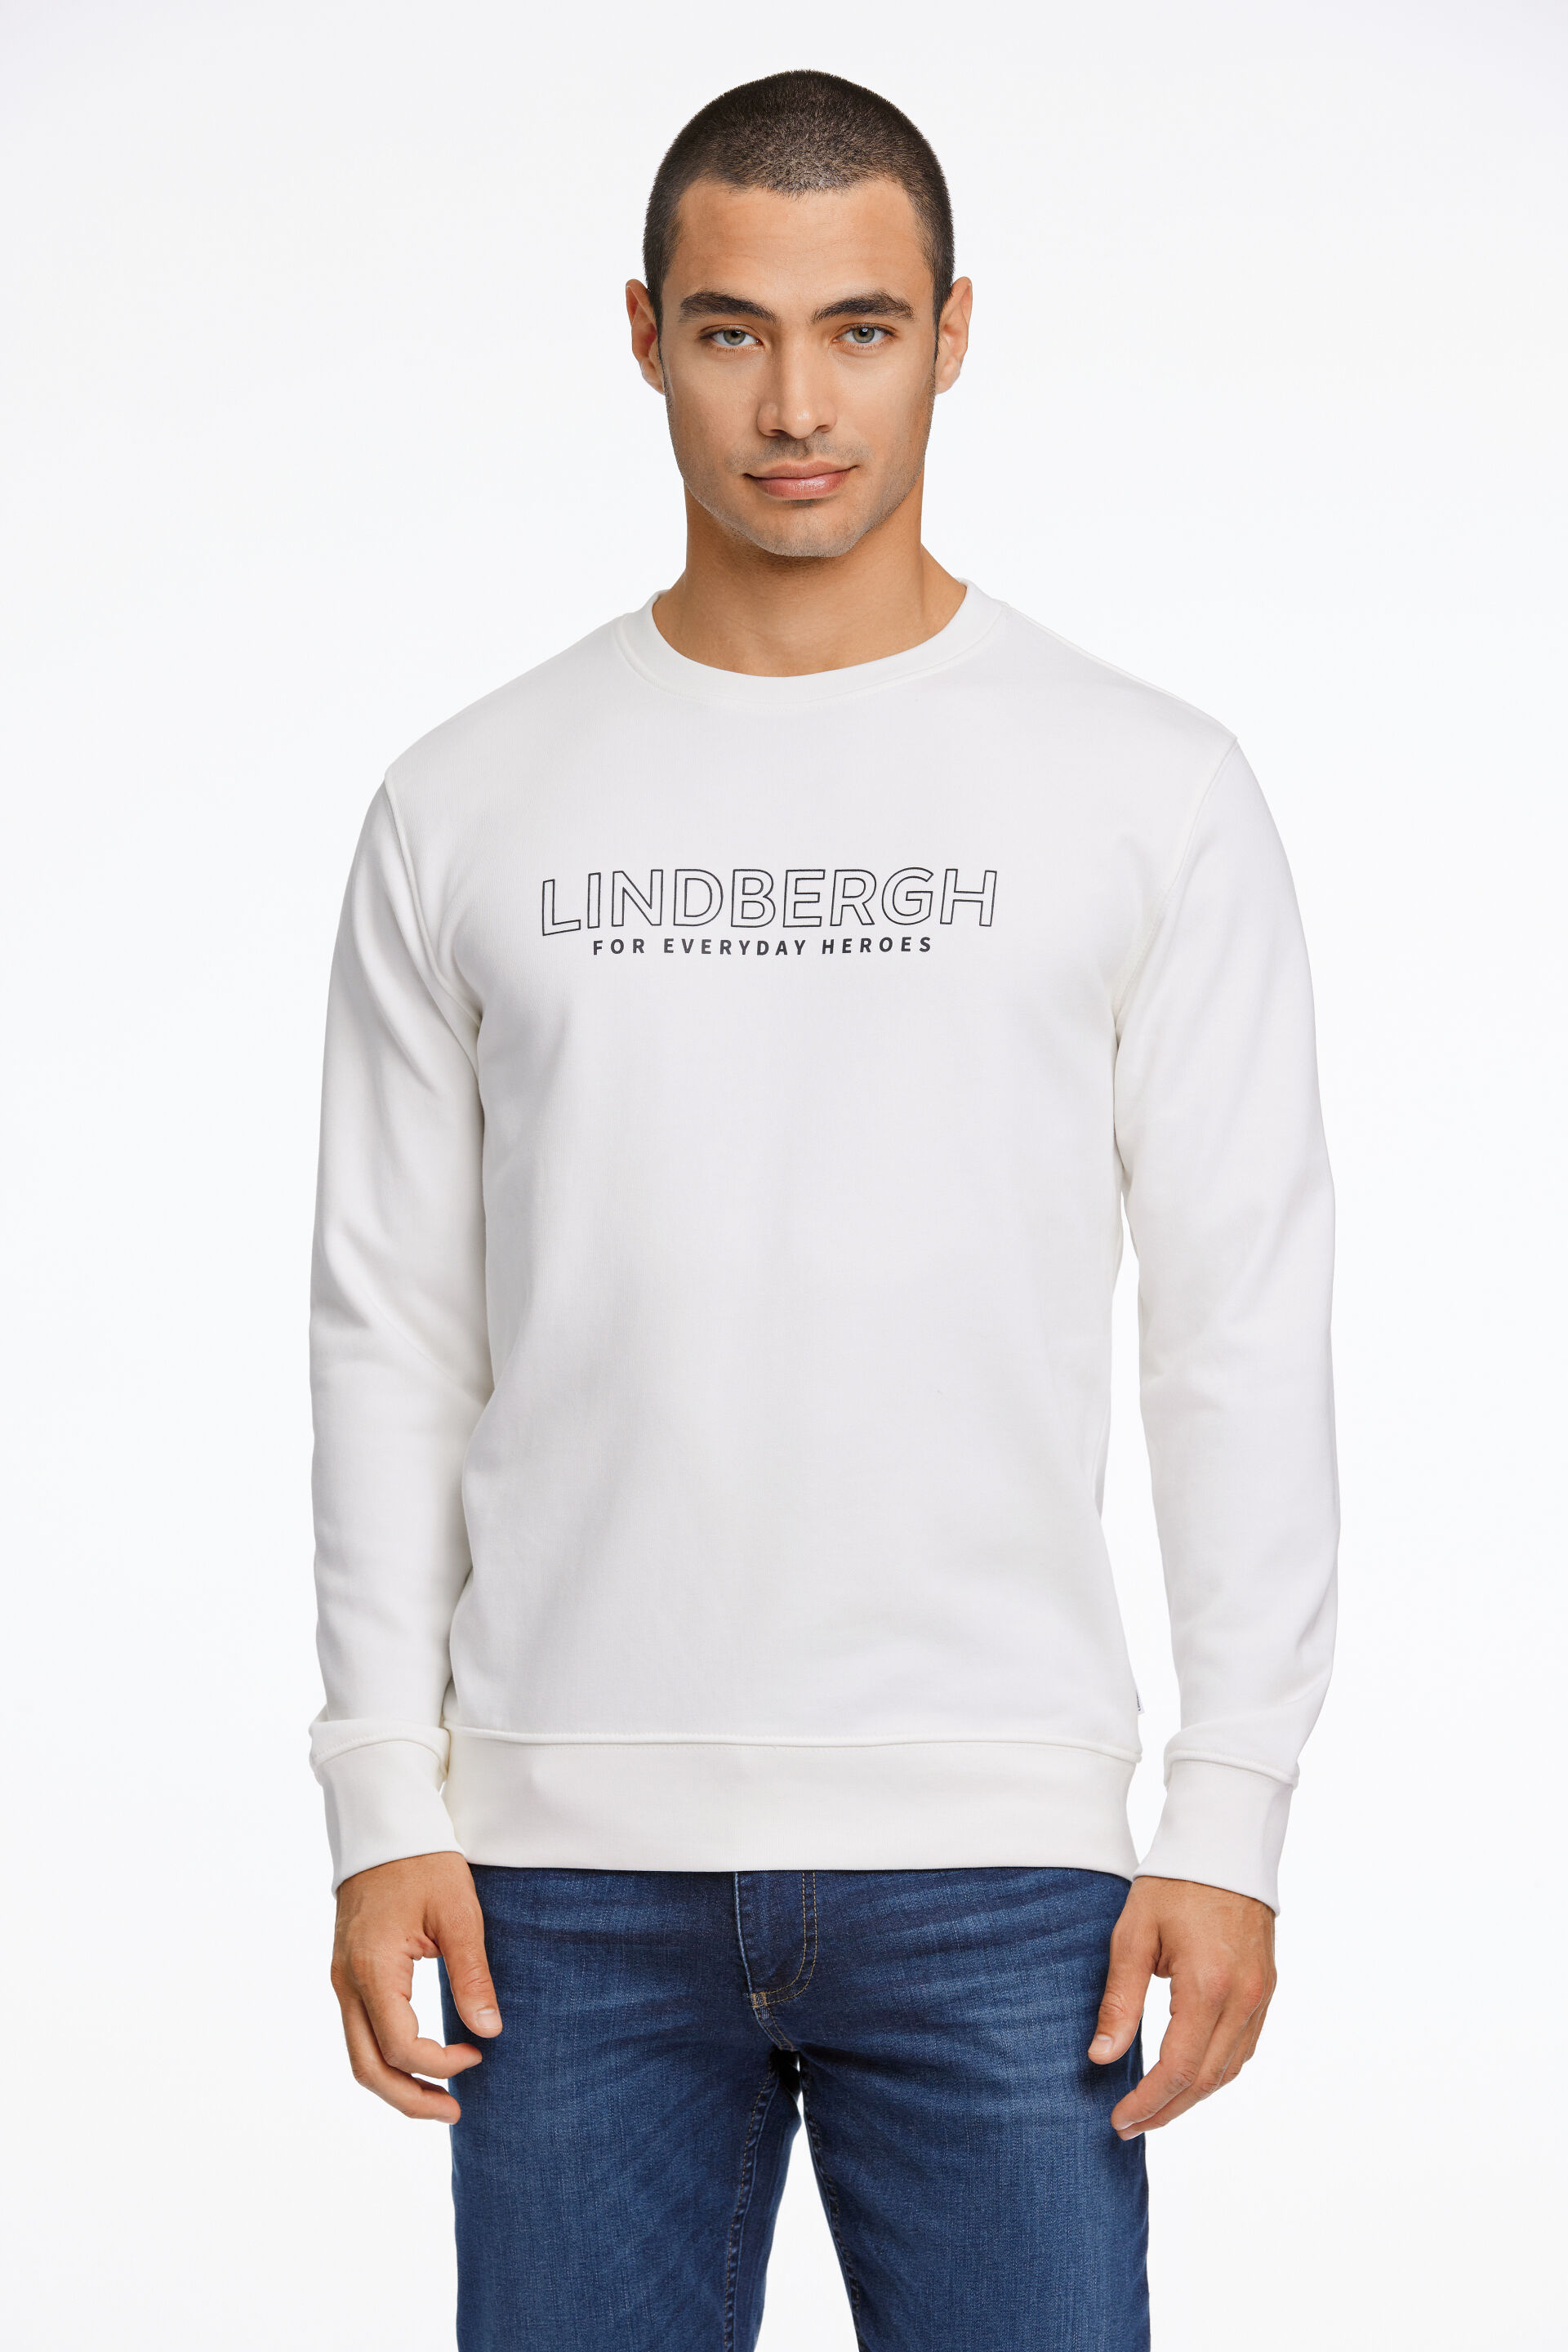 Lindbergh  30-705127